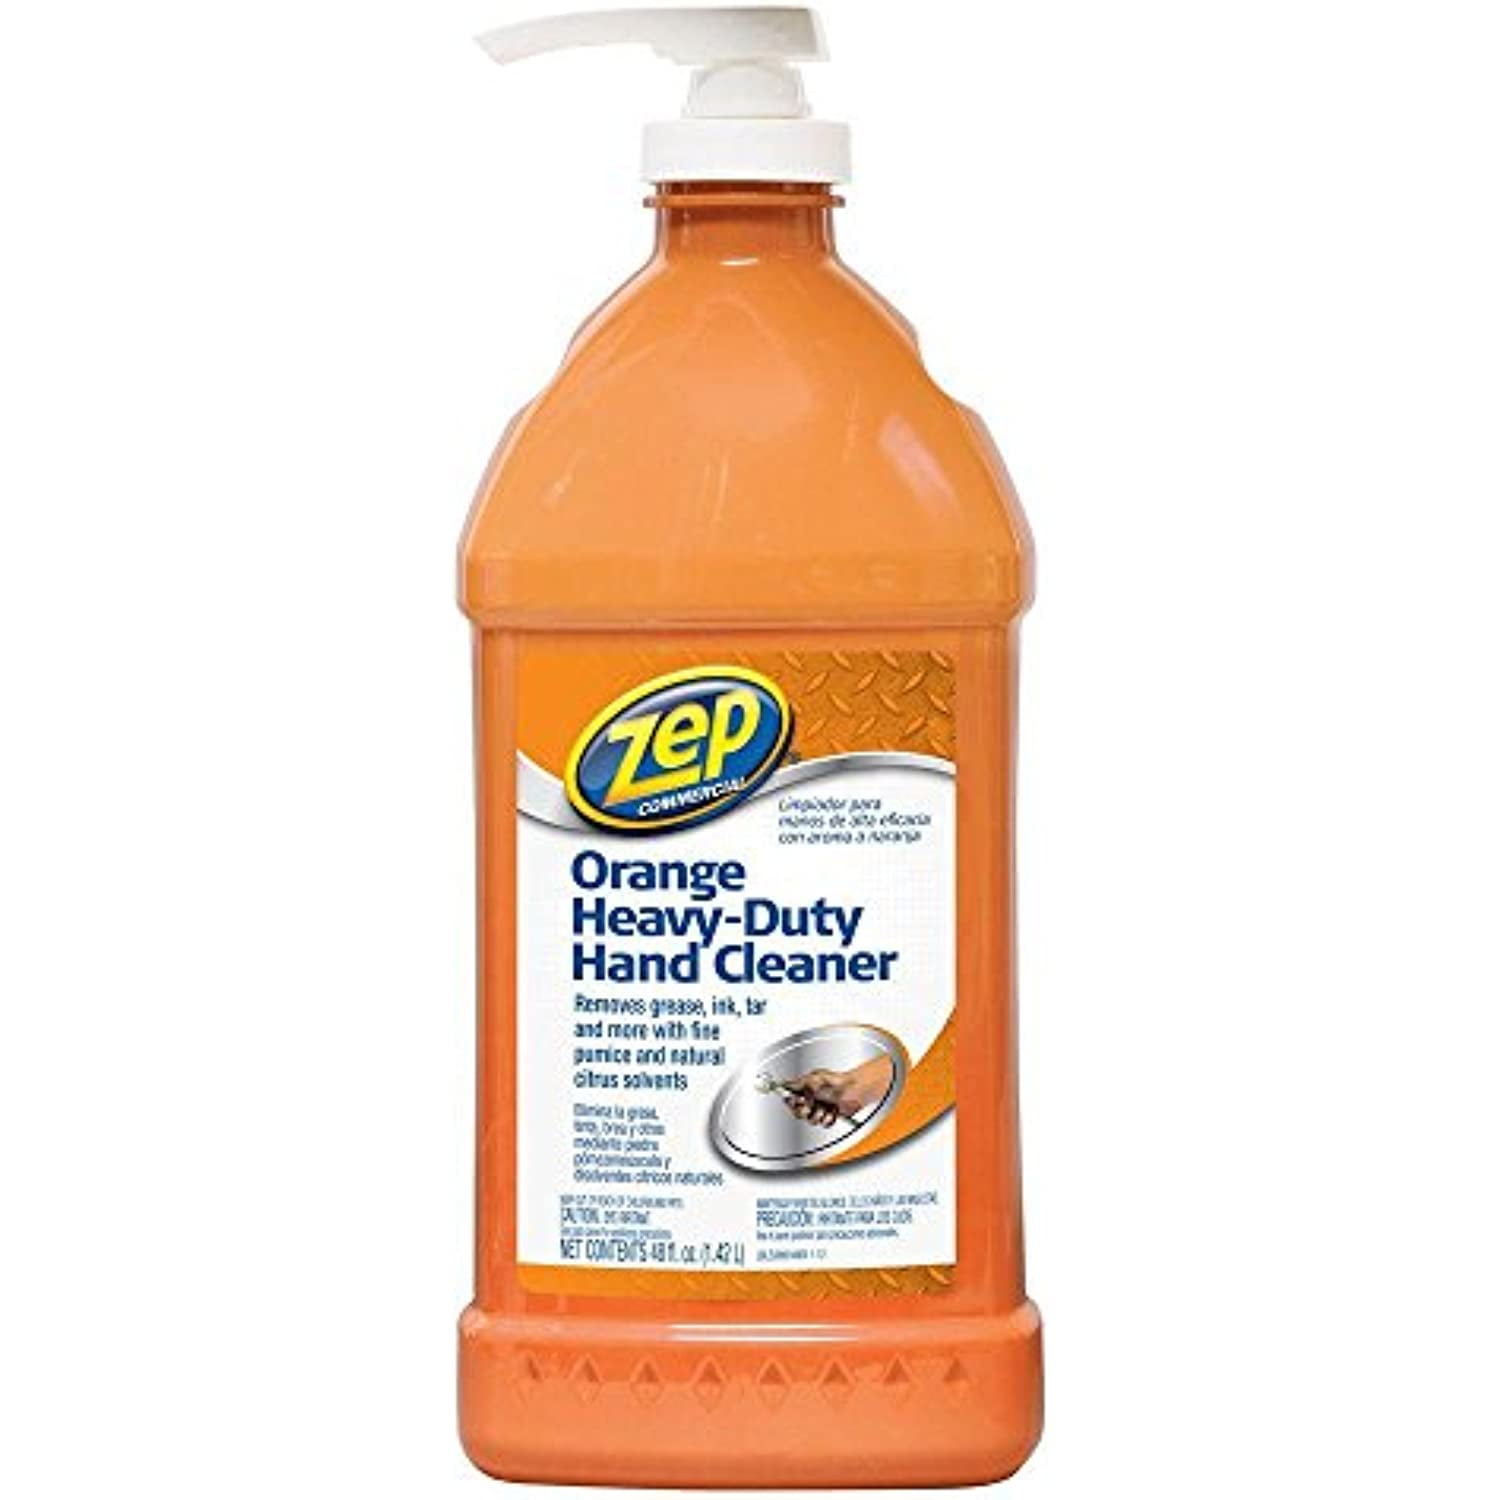 Zep 302824 1 gal. Liquid Hand Cleaner Jug, Pk 4, Orange